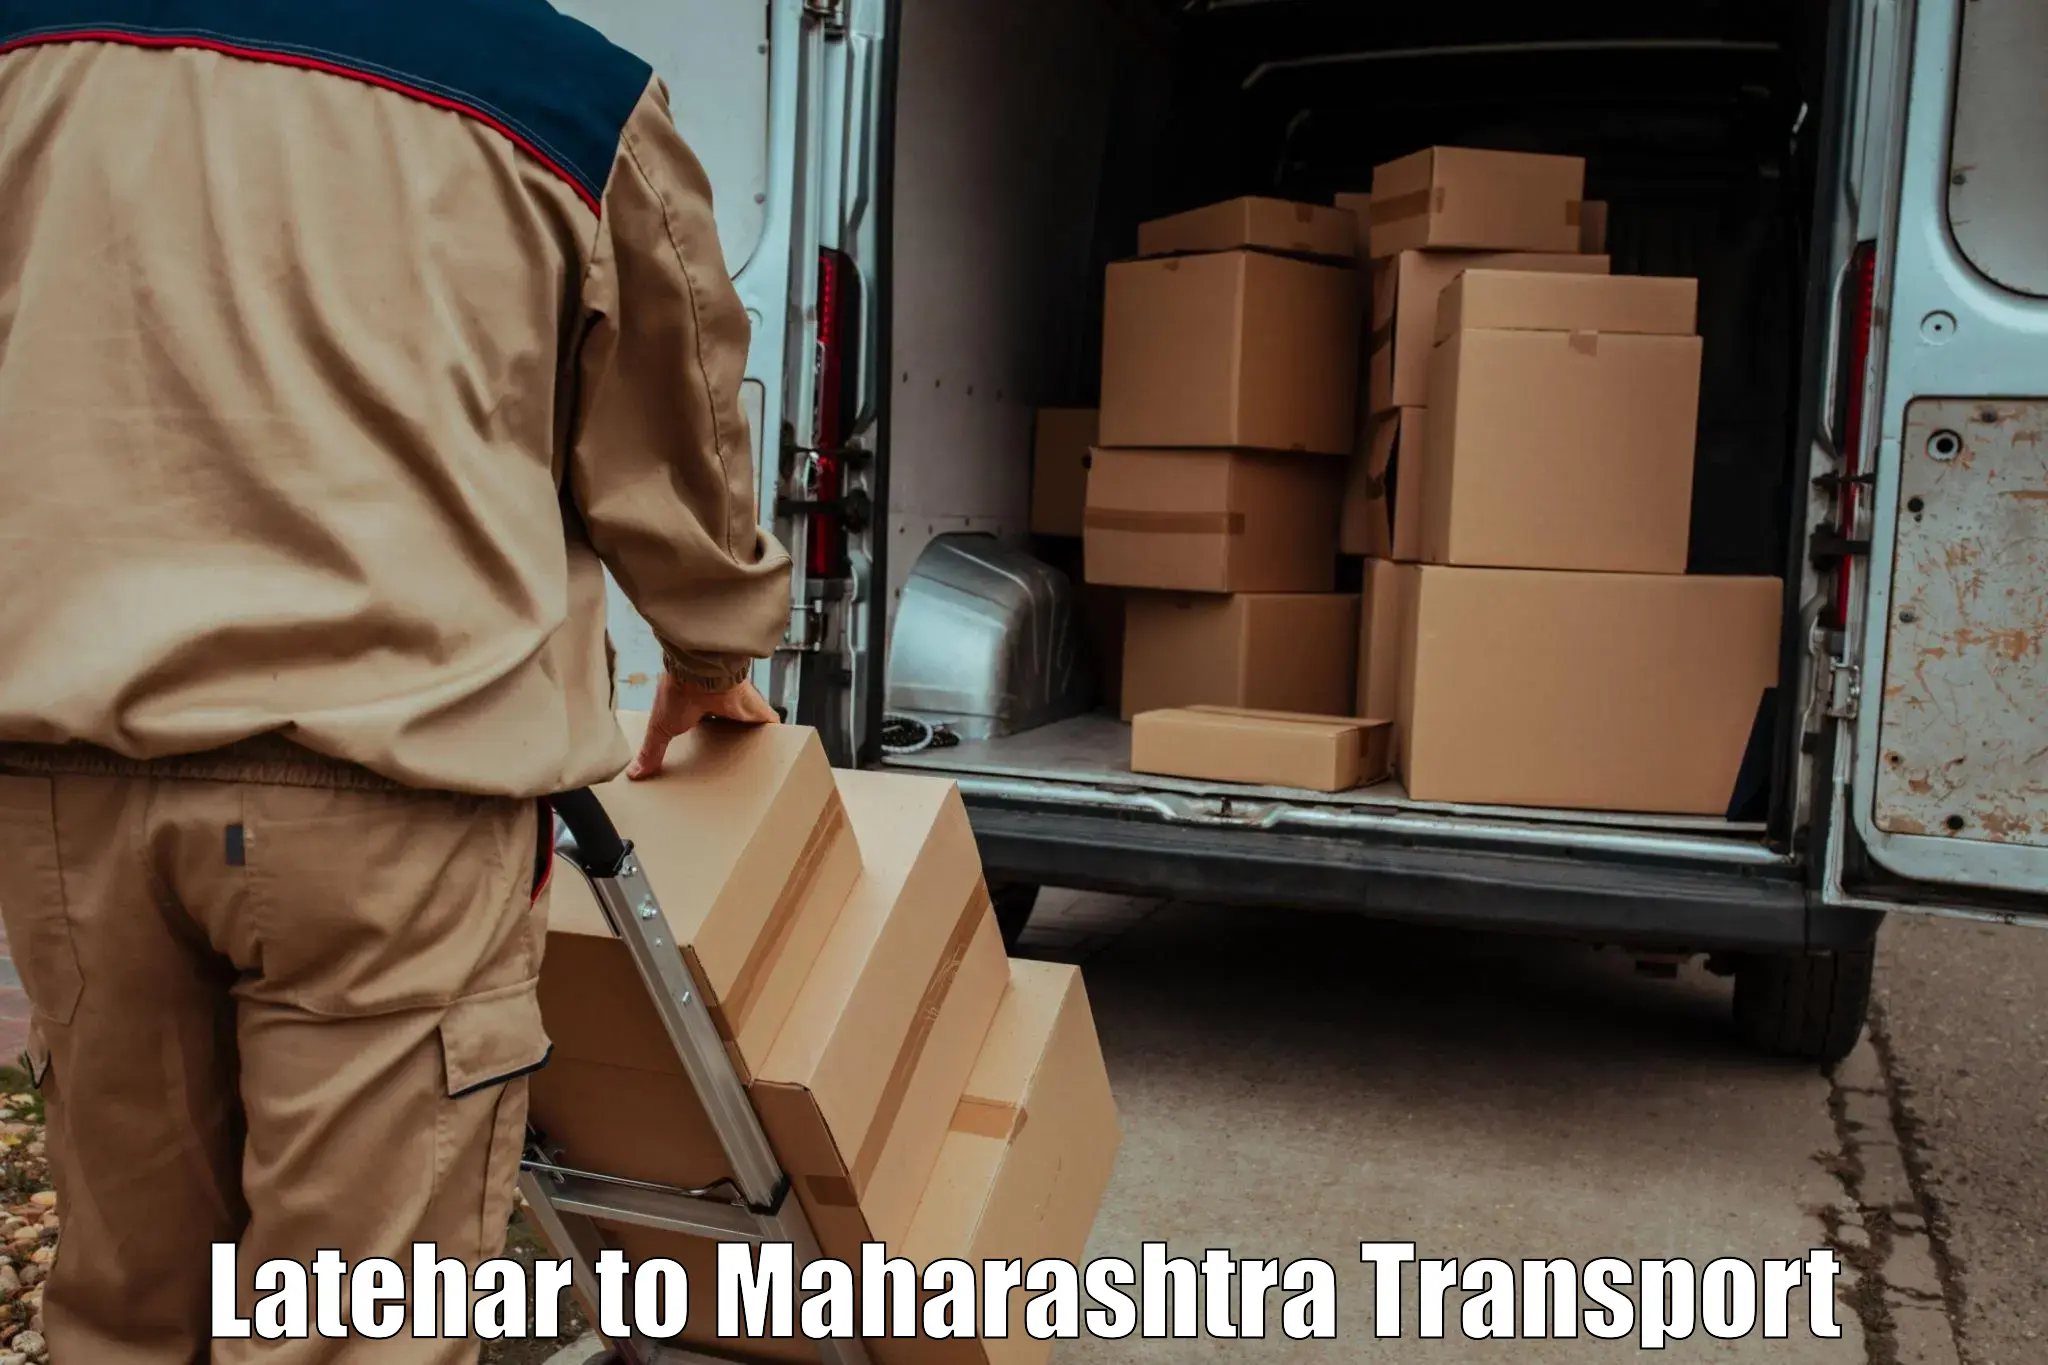 Transport in sharing Latehar to Rajura